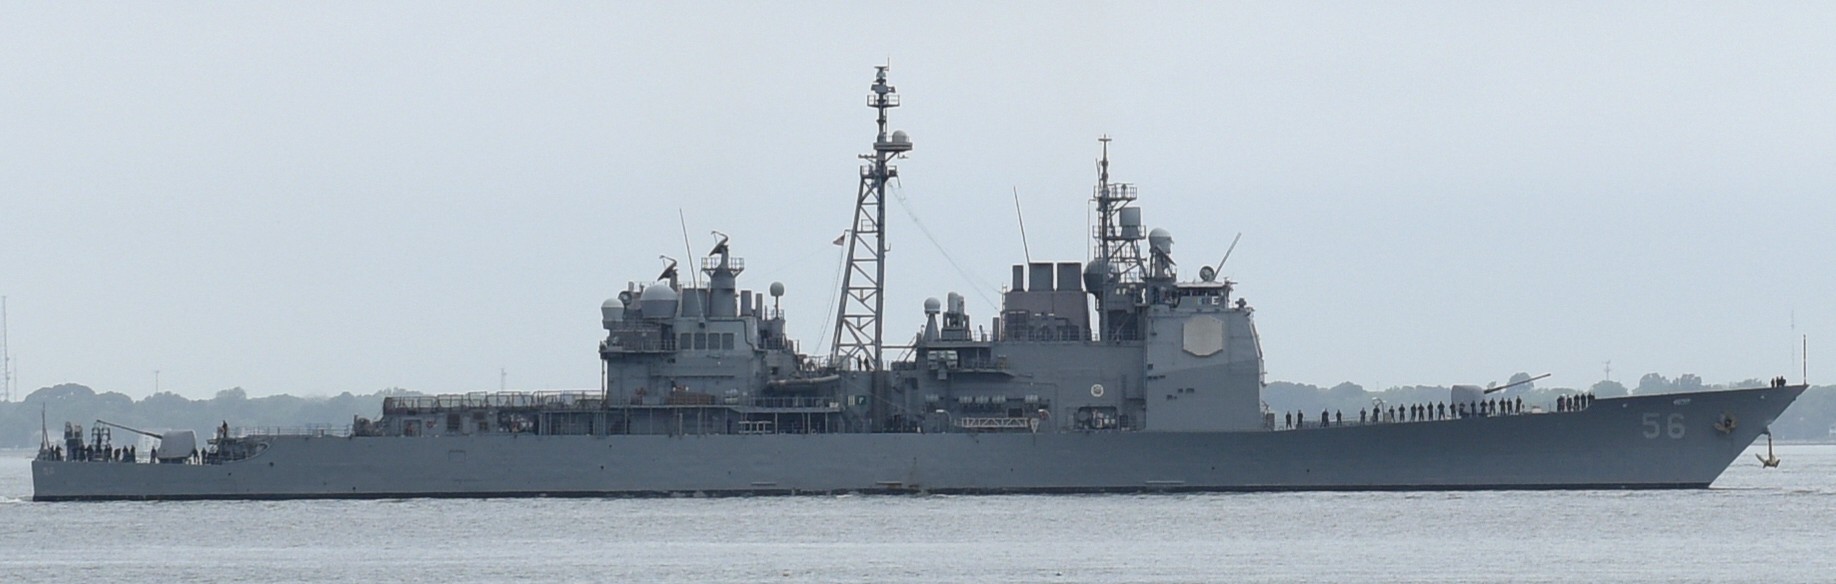 cg-56 uss san jacinto ticonderoga class guided missile cruiser aegis us navy 97